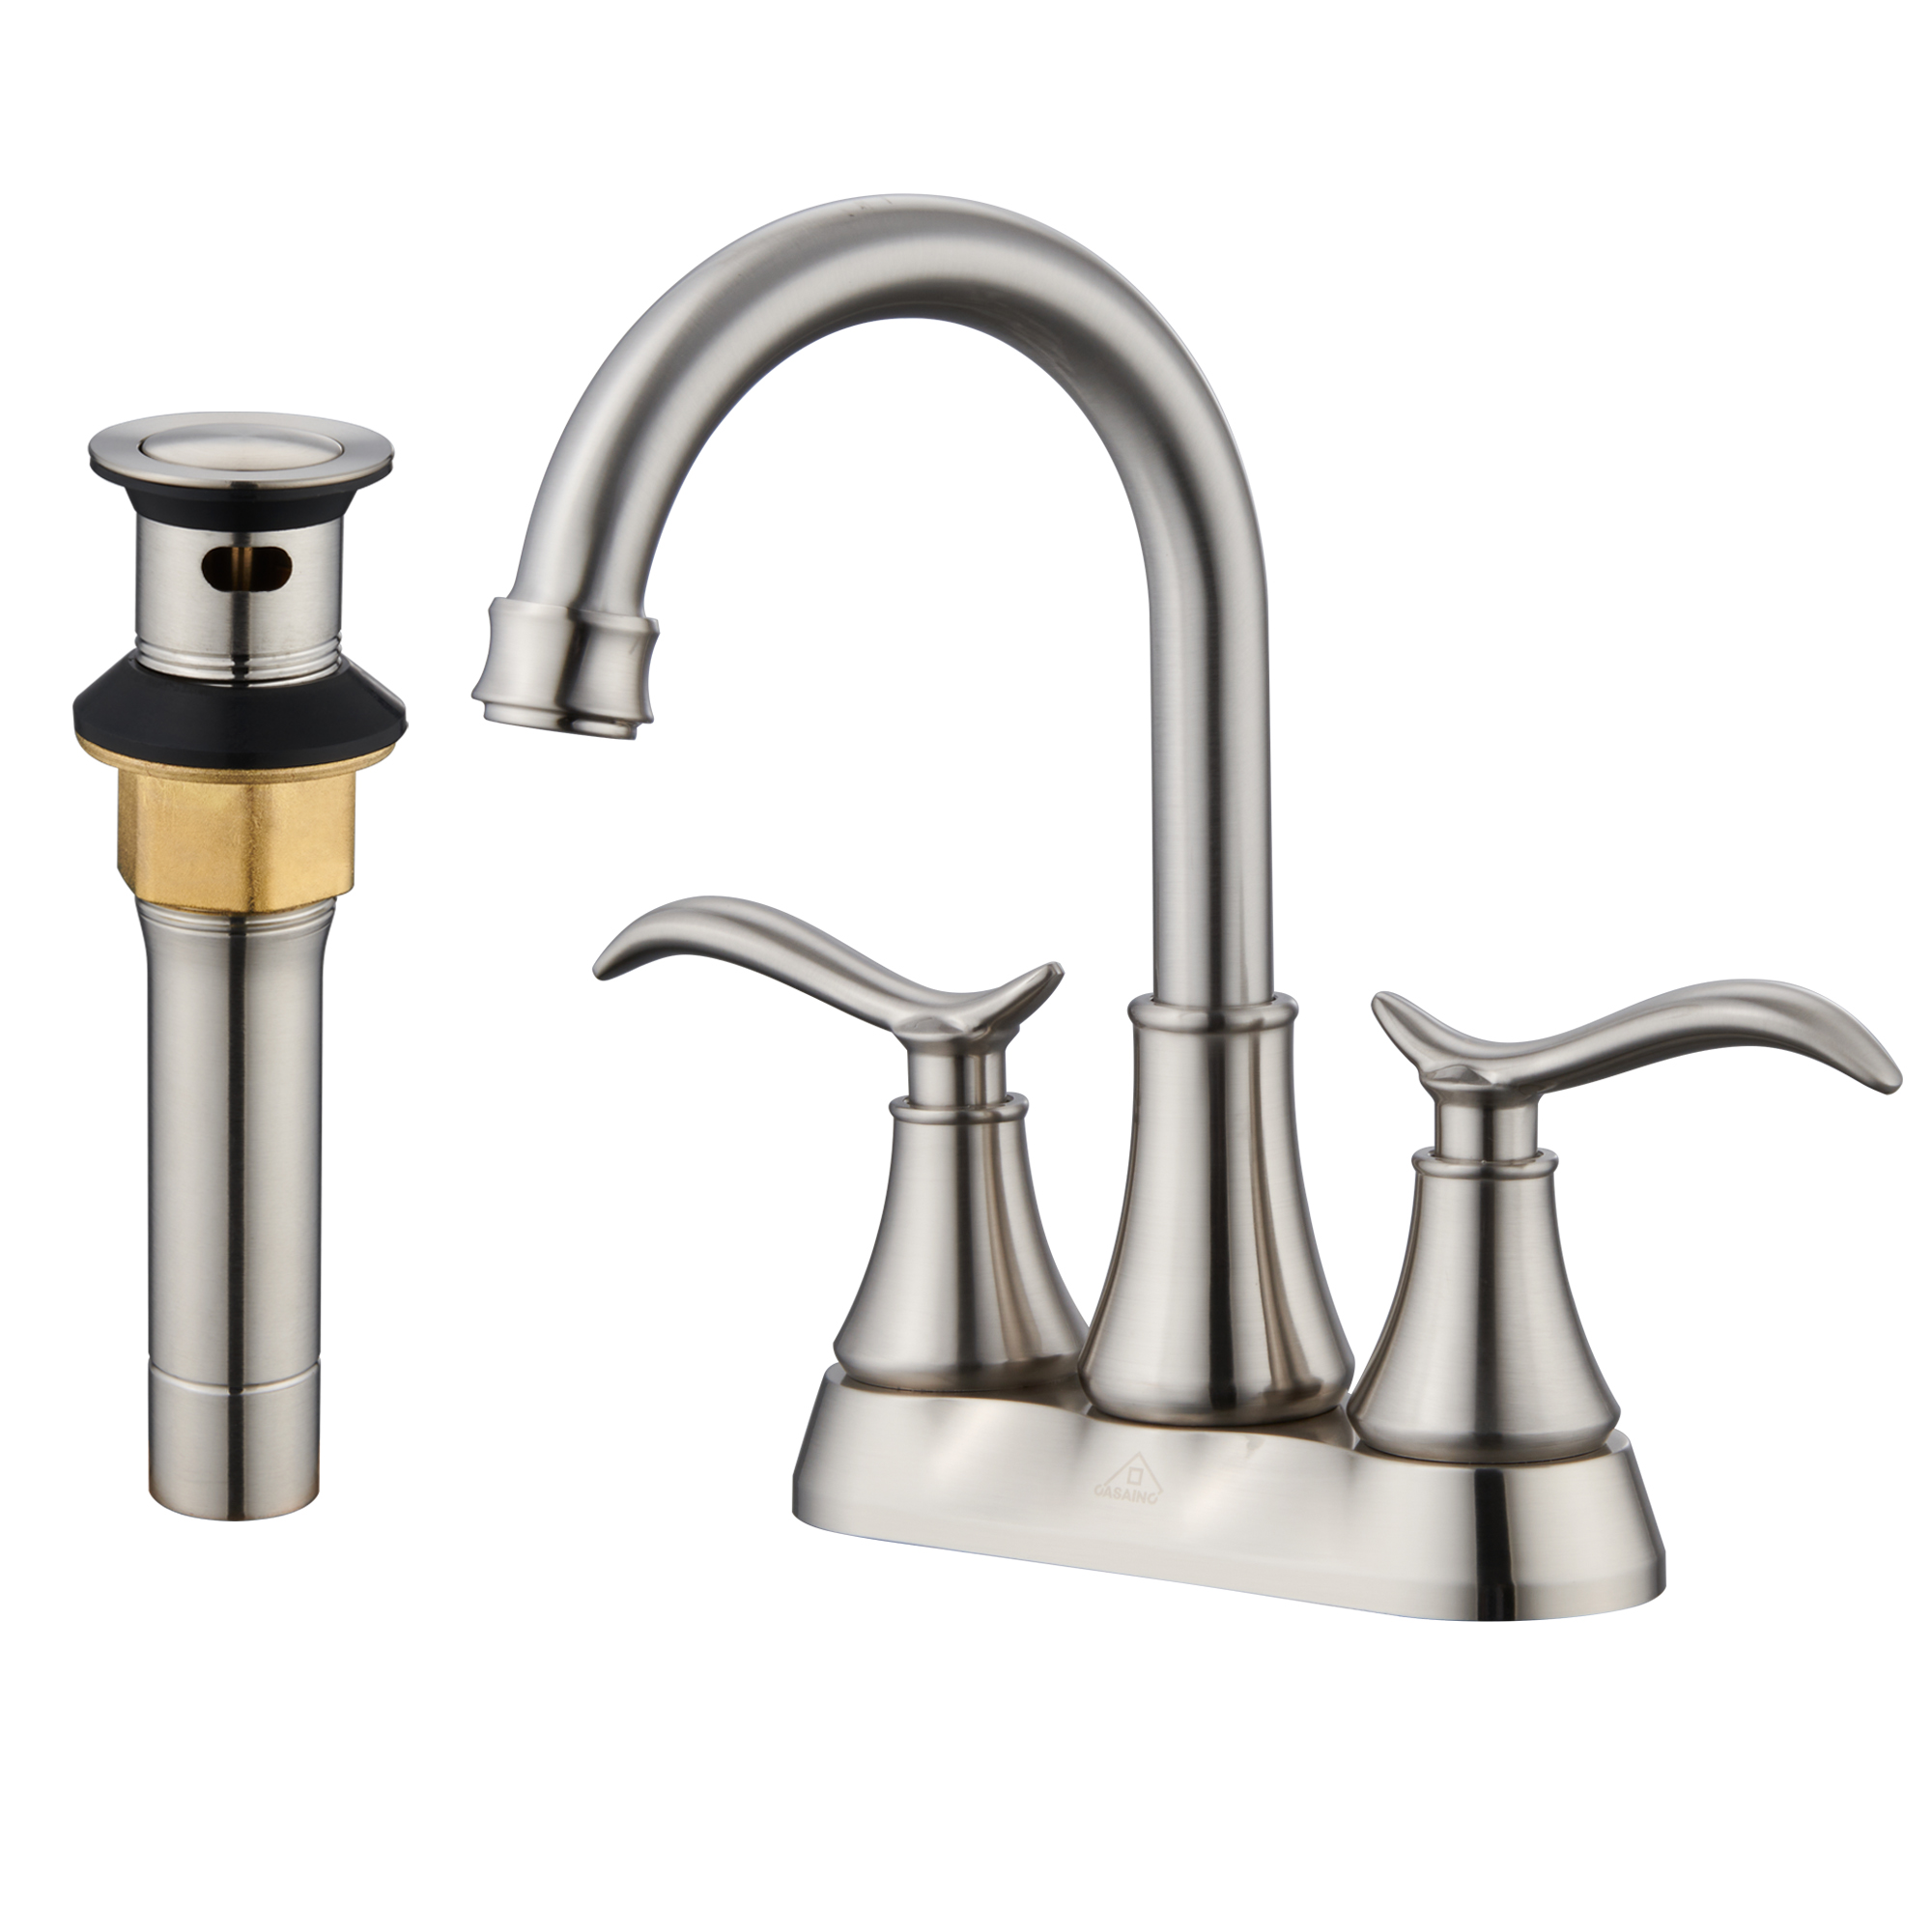 Casainc 2-Handle Centerset Bathroom Faucet for Bathroom Sink Vanity Faucet 360° Swivel Spout copper tones nickel tones